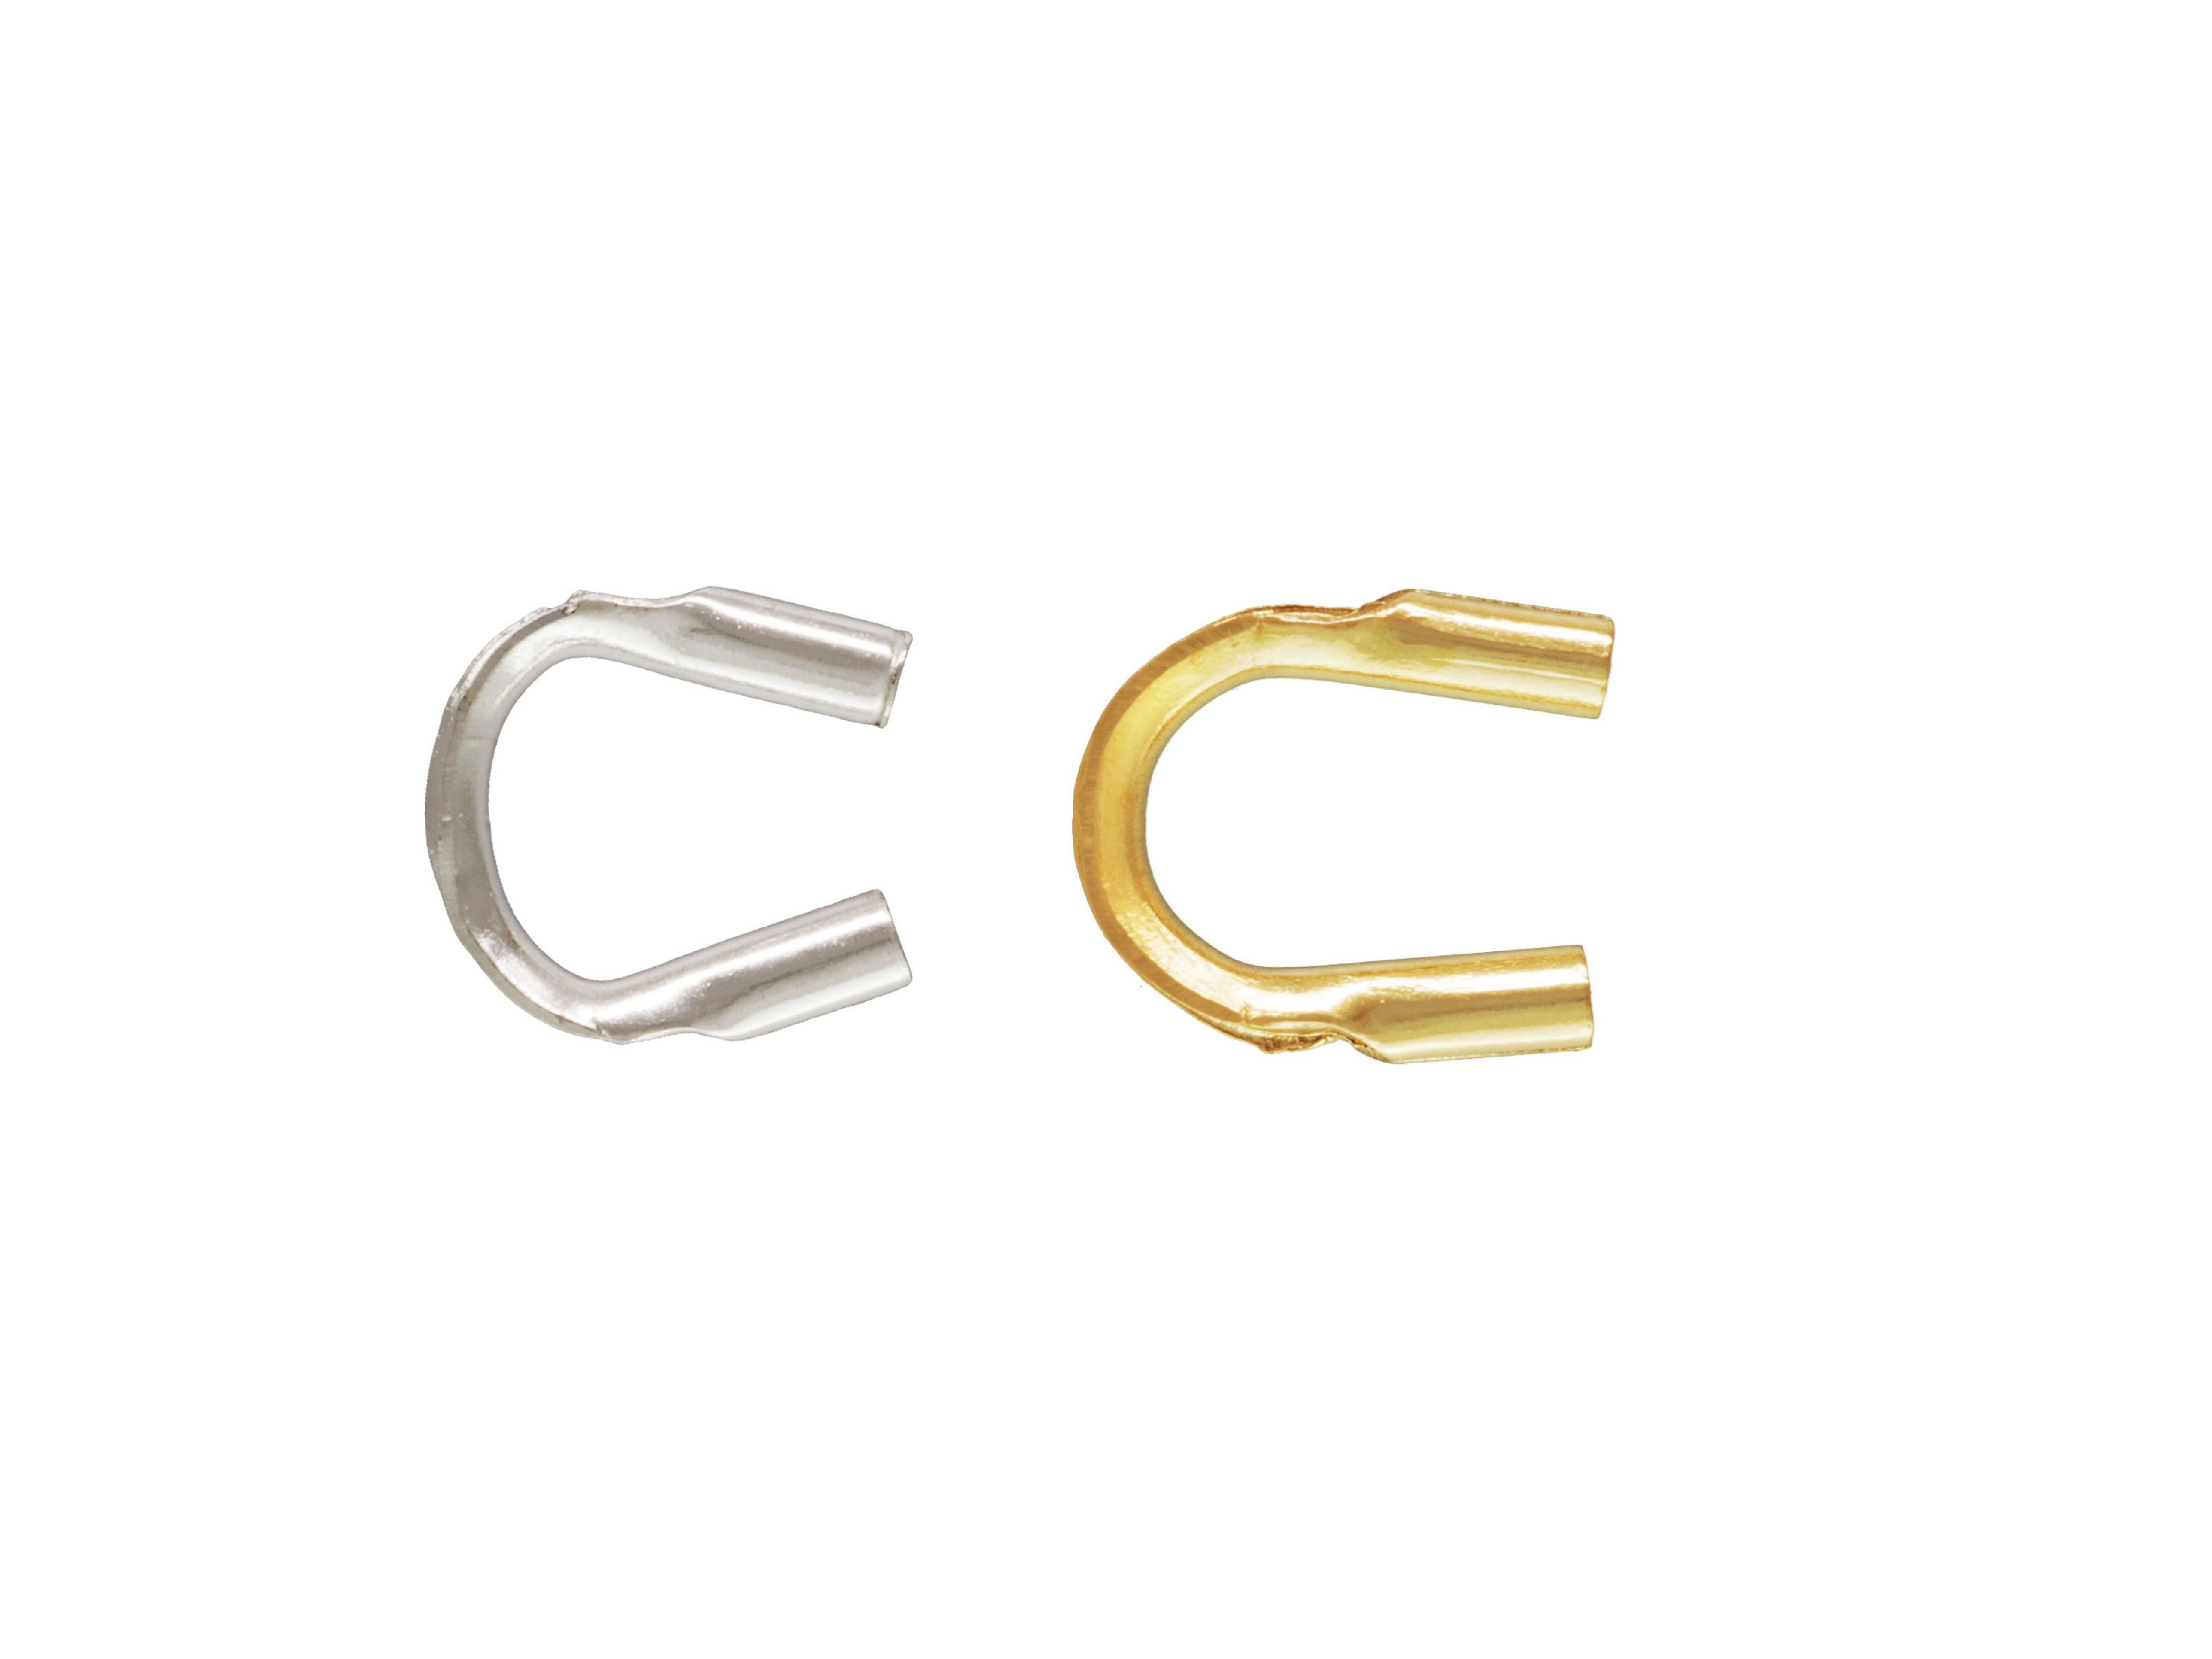 Stretch Magic Elastic Cord 0.5mm, 0.7mm, 0.8mm, 1mm. Clear Elastic Cor